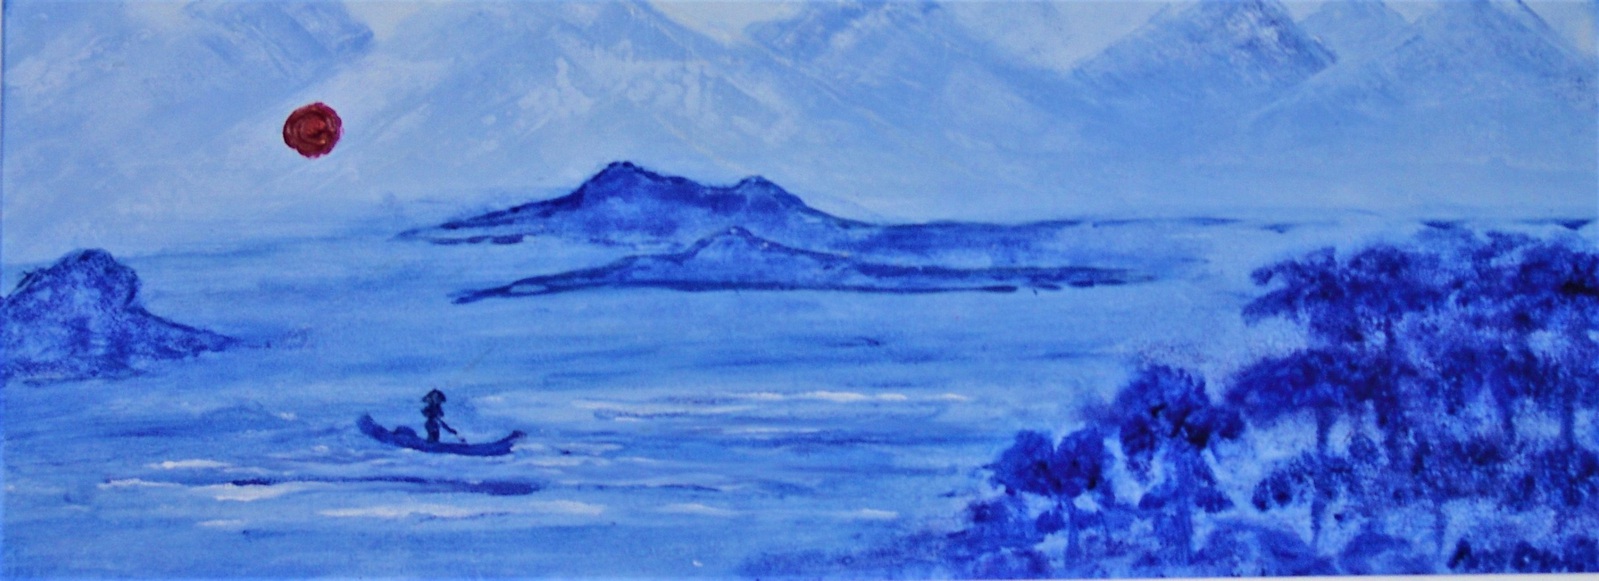 Japanese landscape in blue